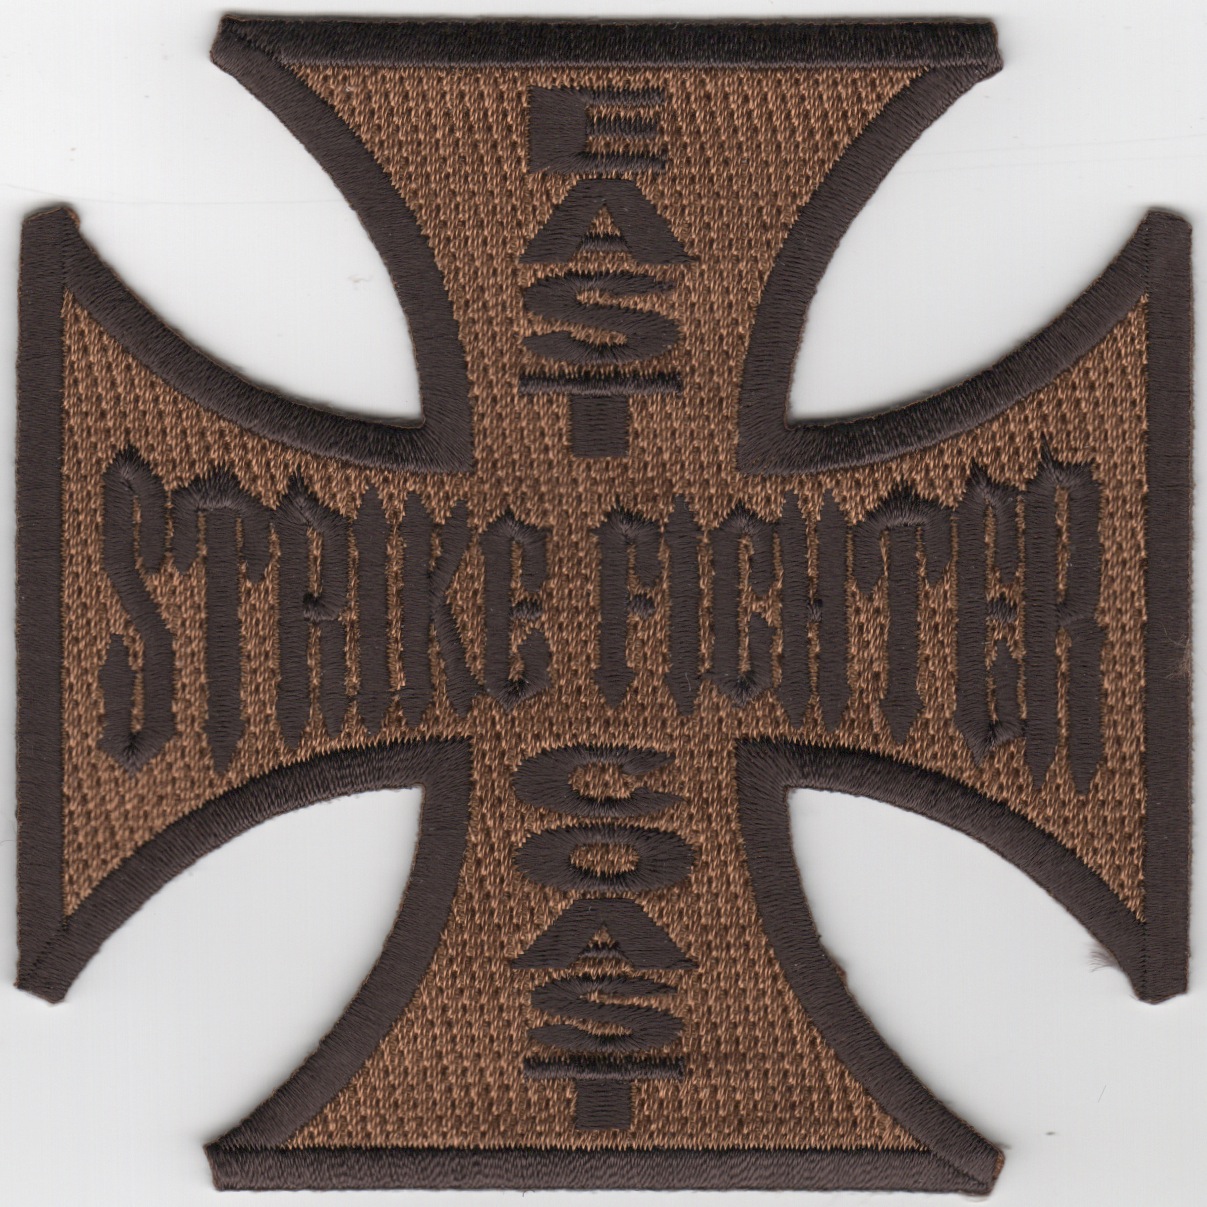 East Coast Strike Fighter Maltese Cross (Des)